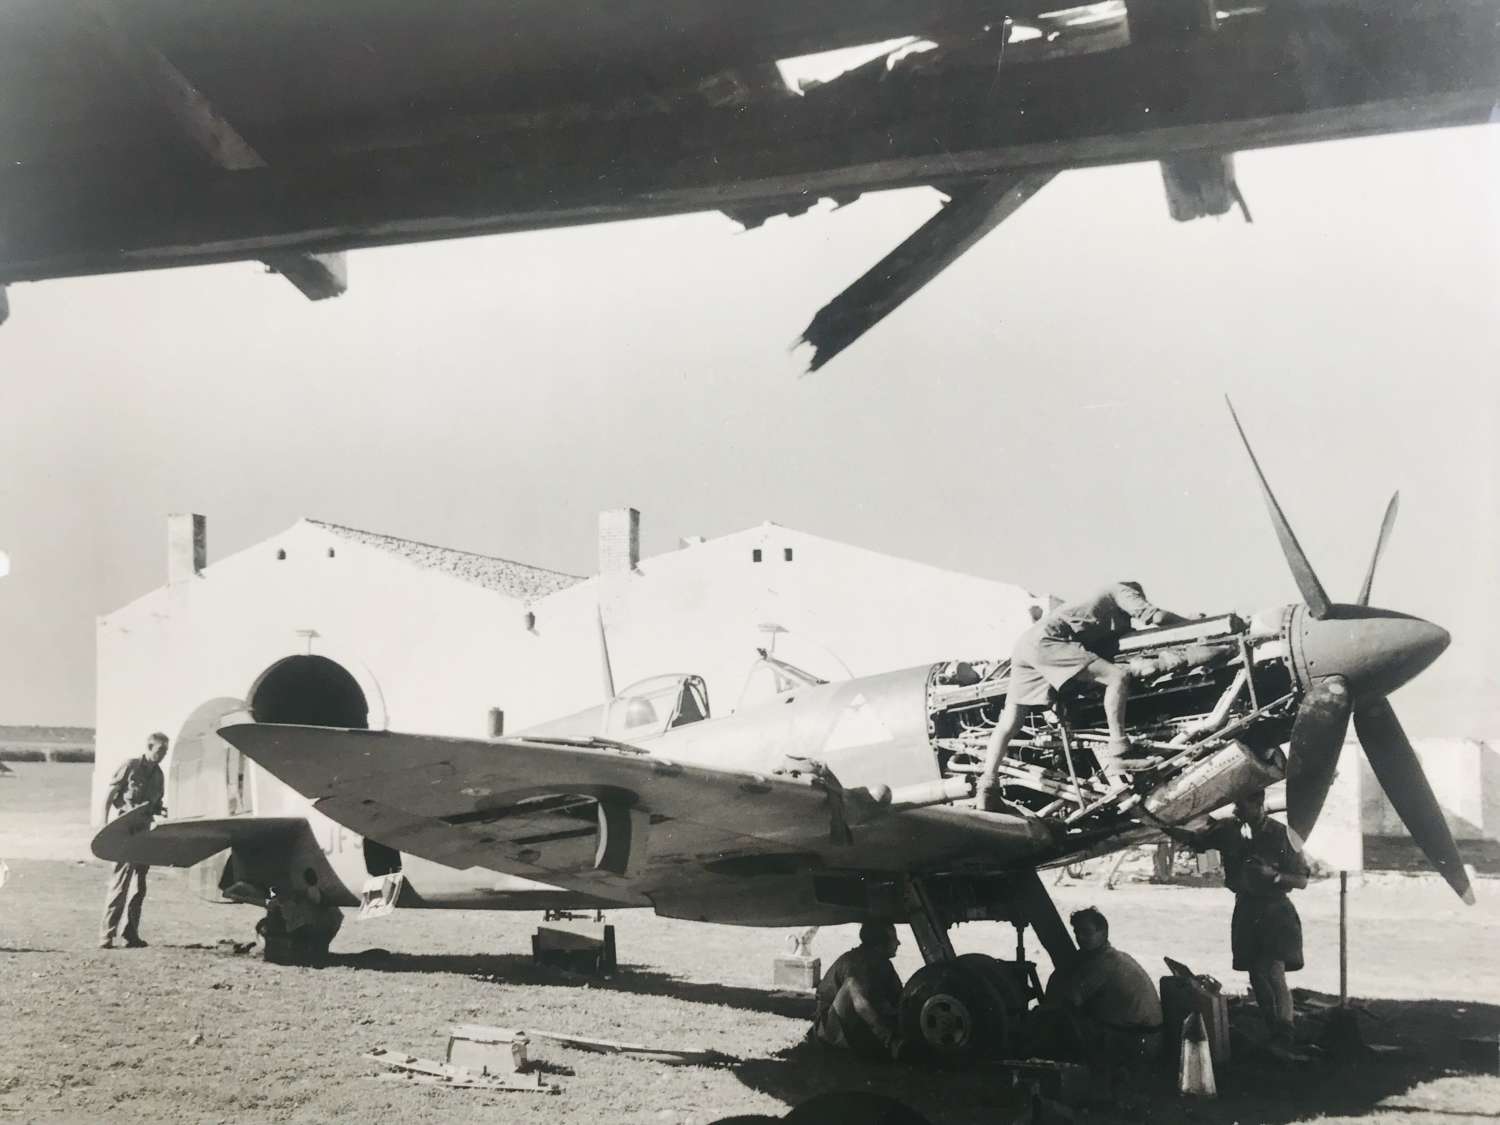 Press photo of a Spitfire MKV111 Italy, 1943